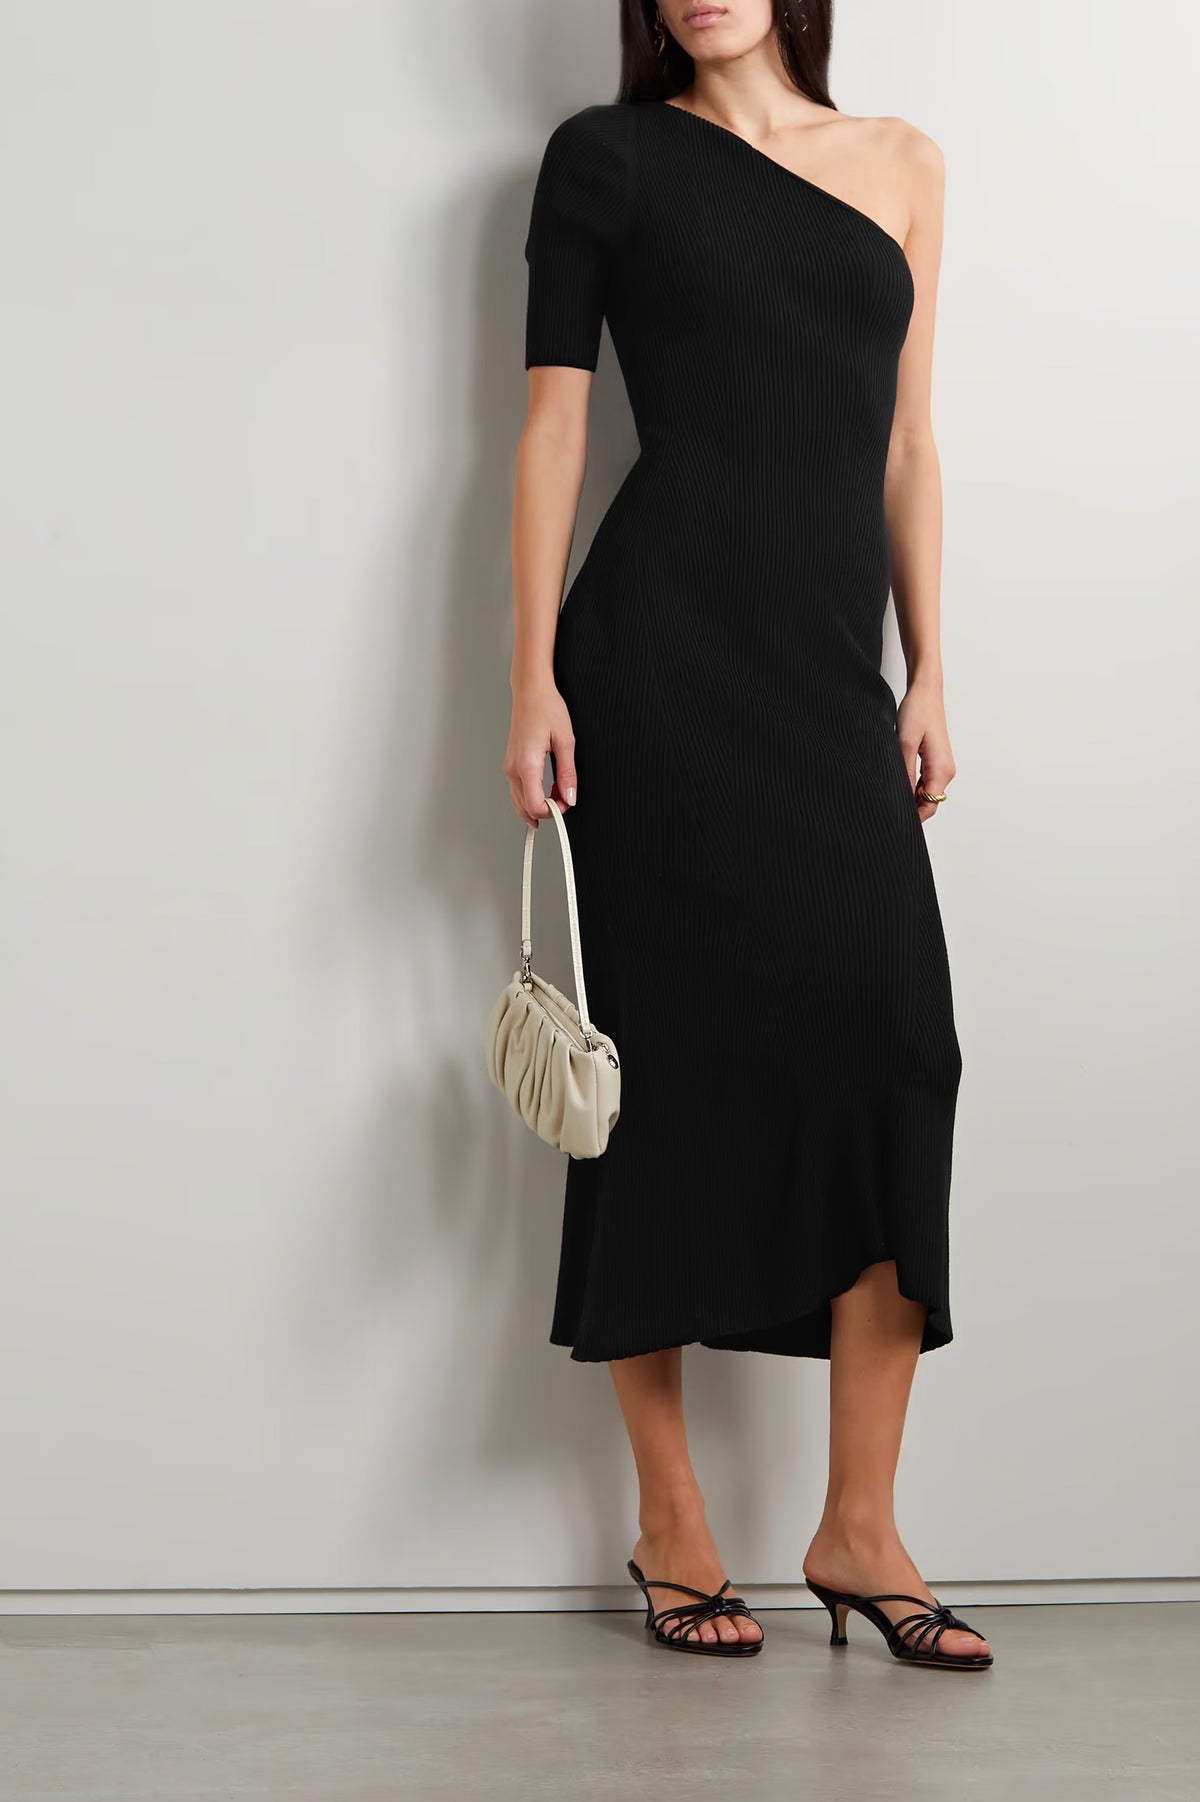 Montrose Knit Dress in Black